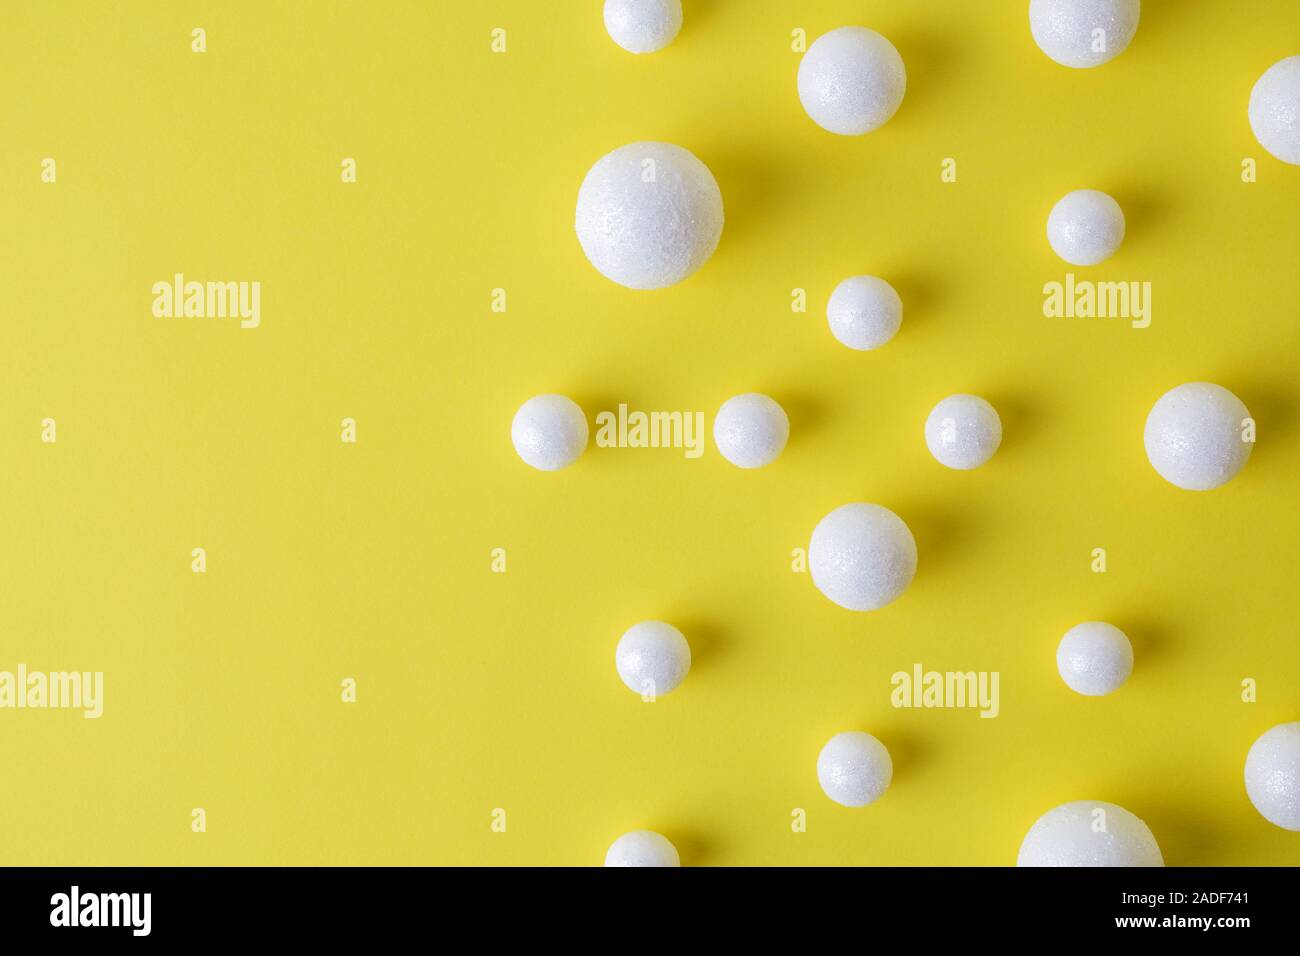 Bubbles made of styrofoam balls on yellow background minimal creative concept. Stock Photo